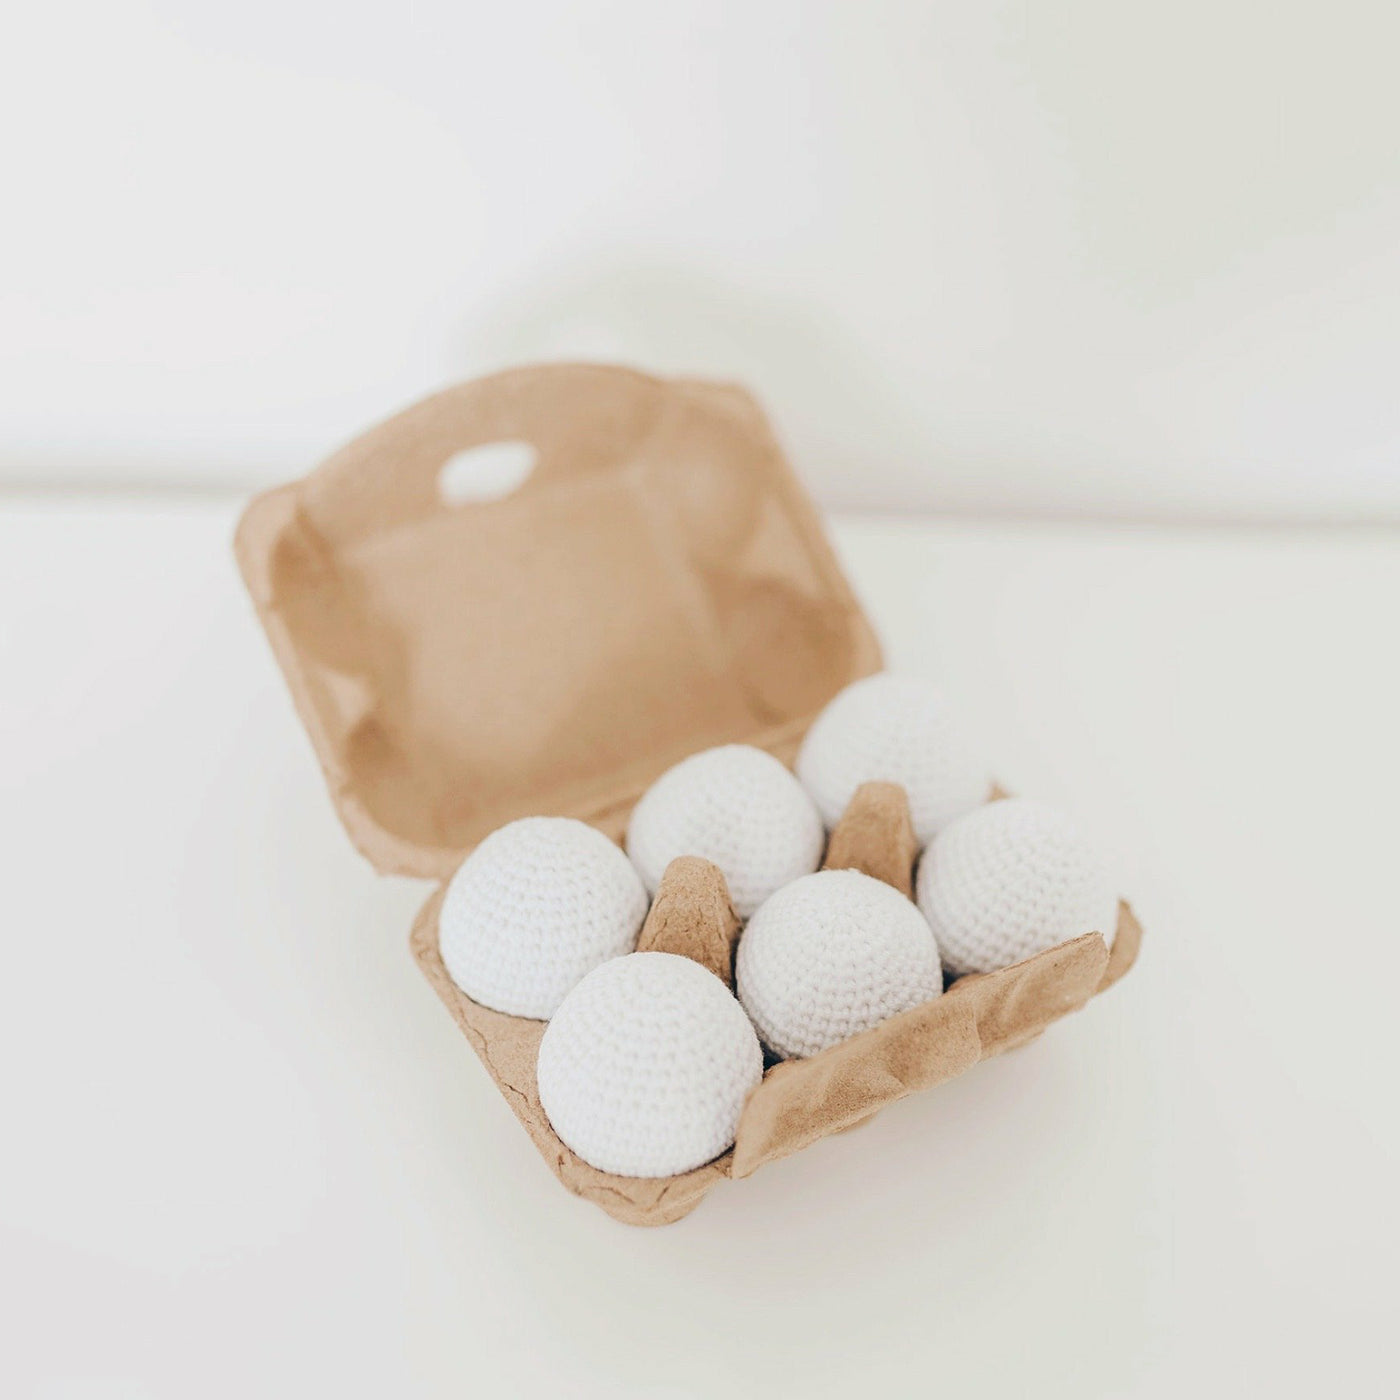 Carton of eggs - 6 crochet eggs